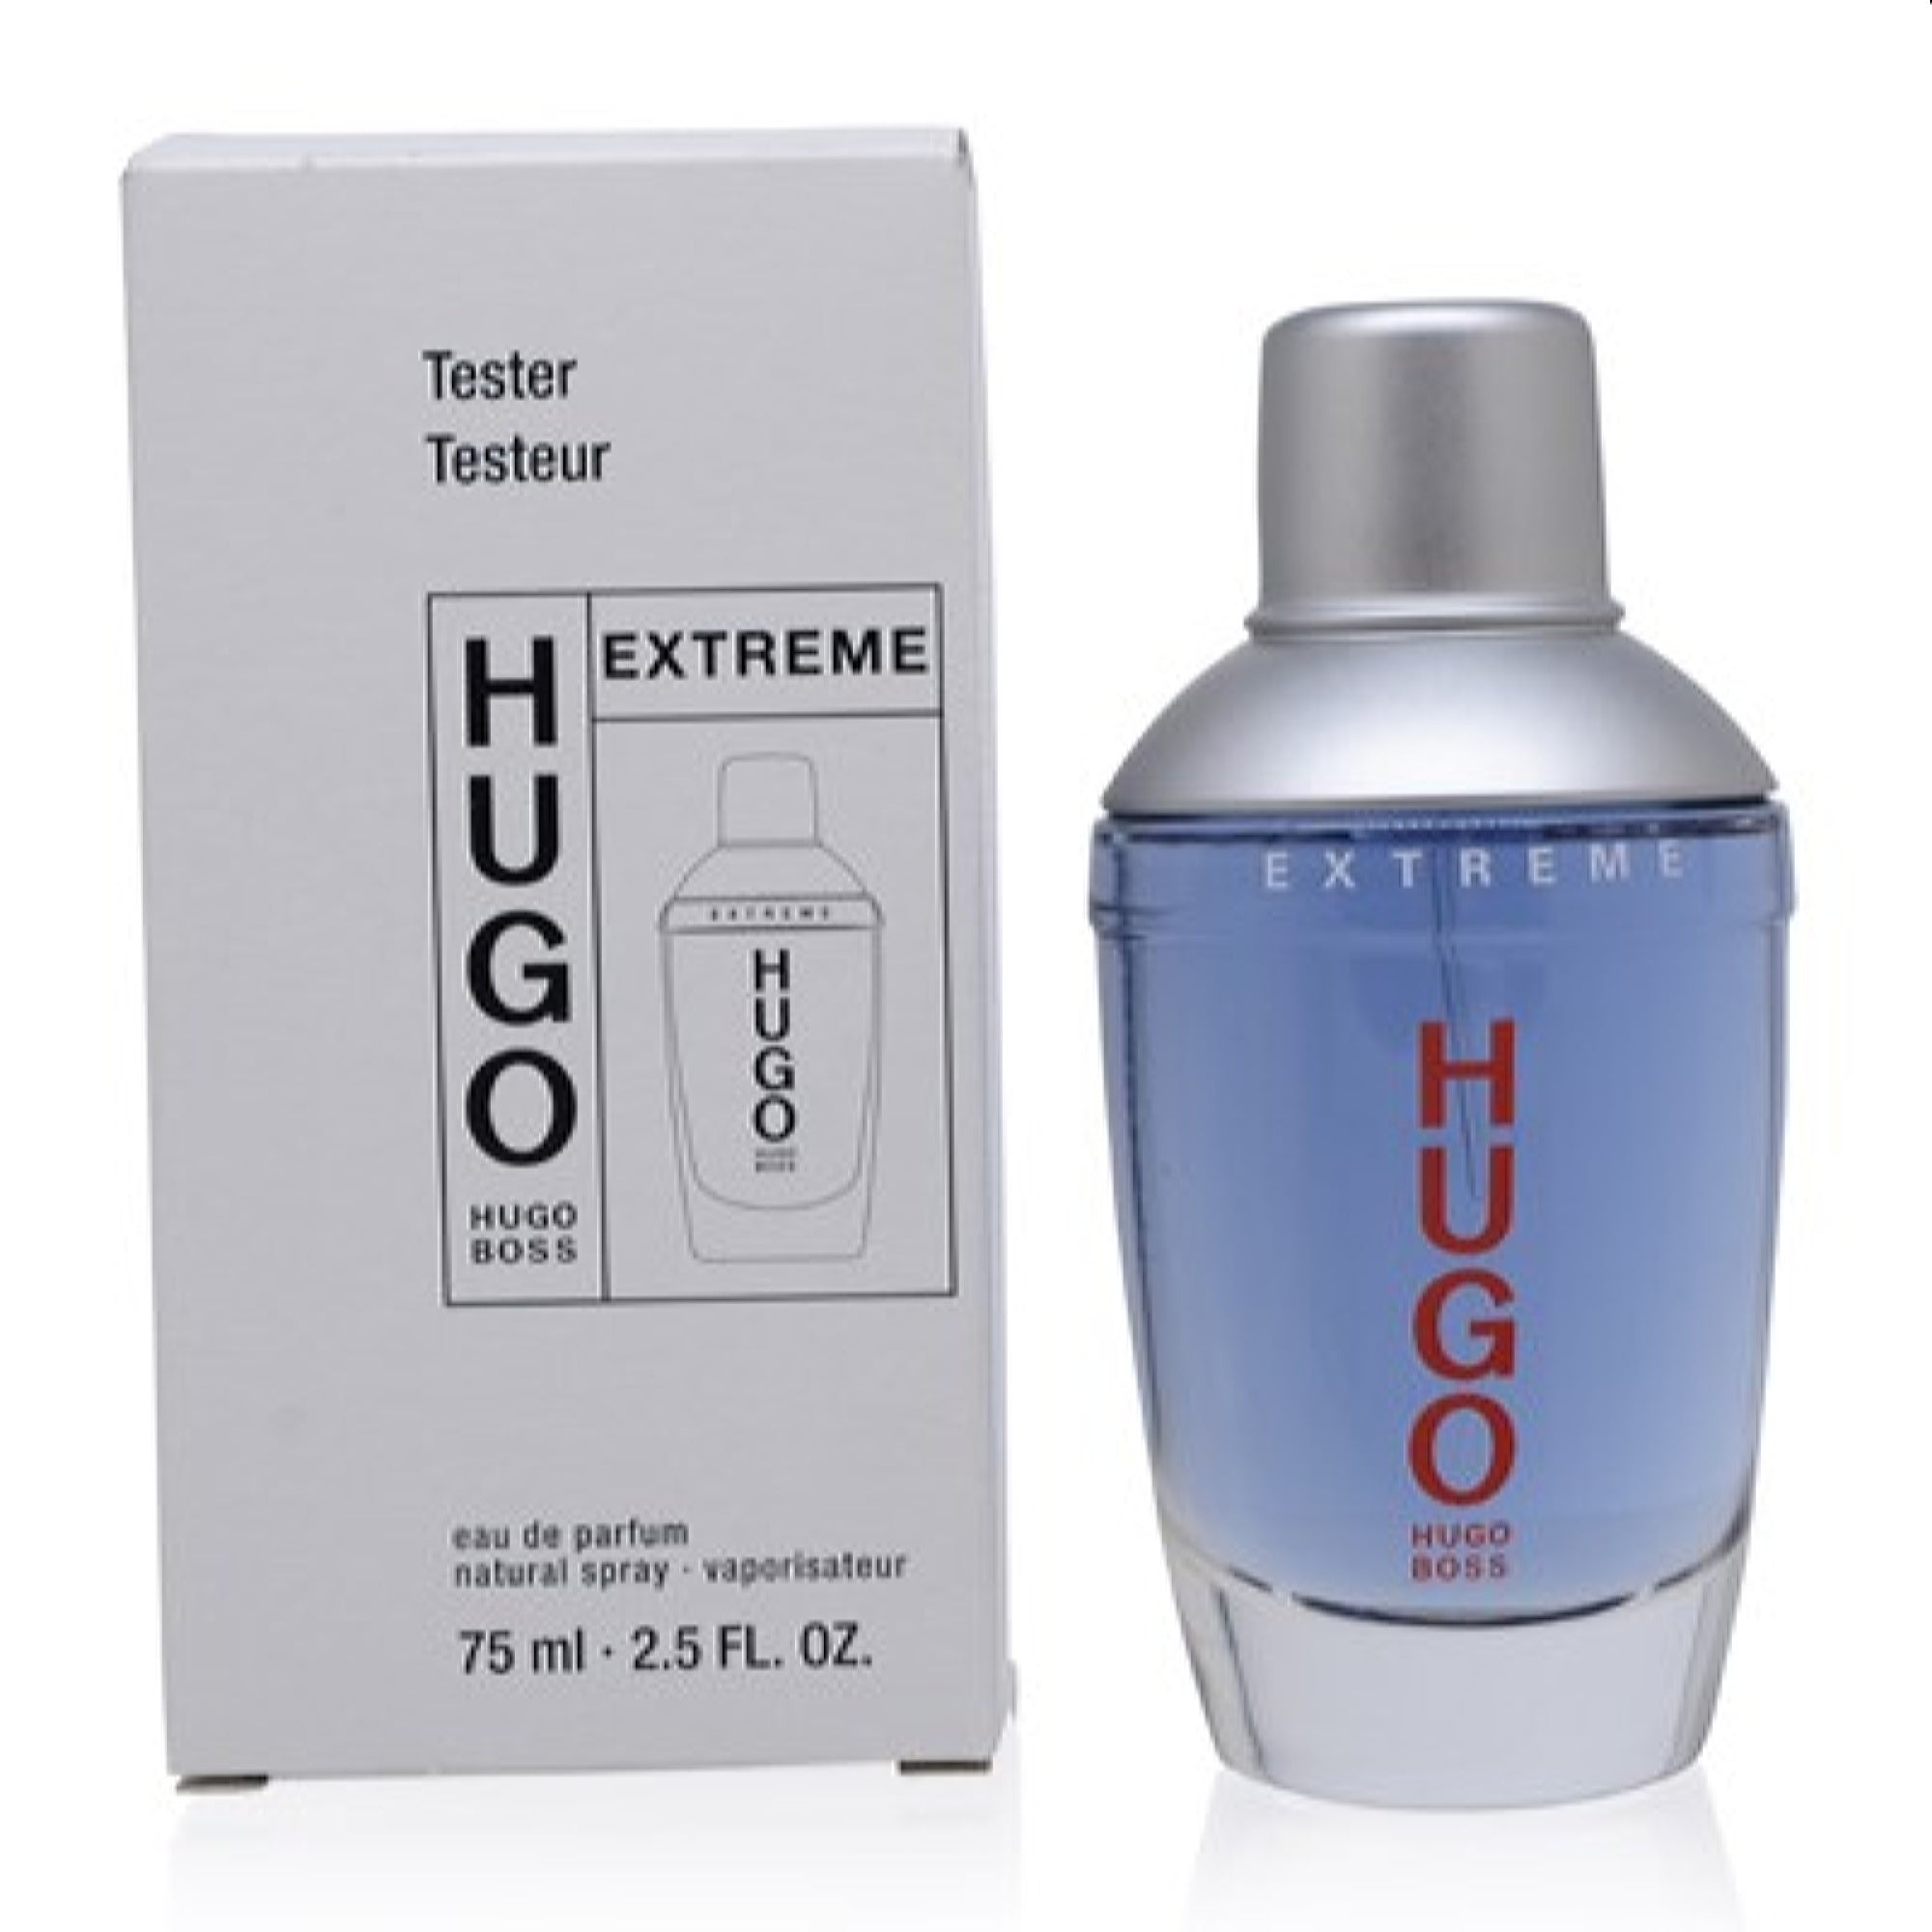 hugo extreme parfum